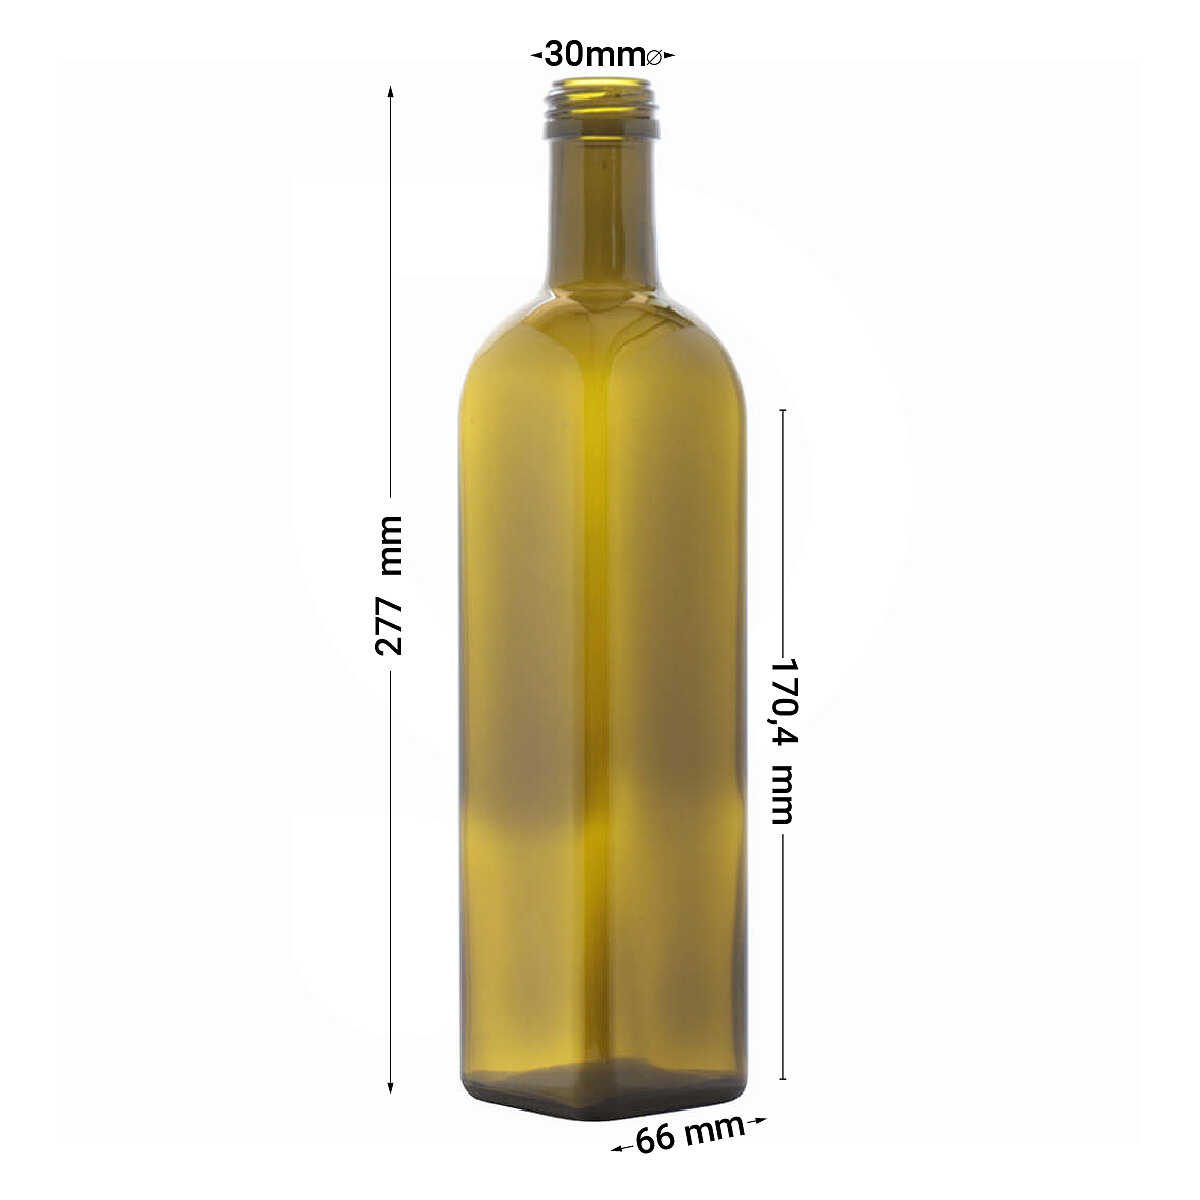 Bouteille Marasca 750 ml uvag (24 pcs) Huile d'olive